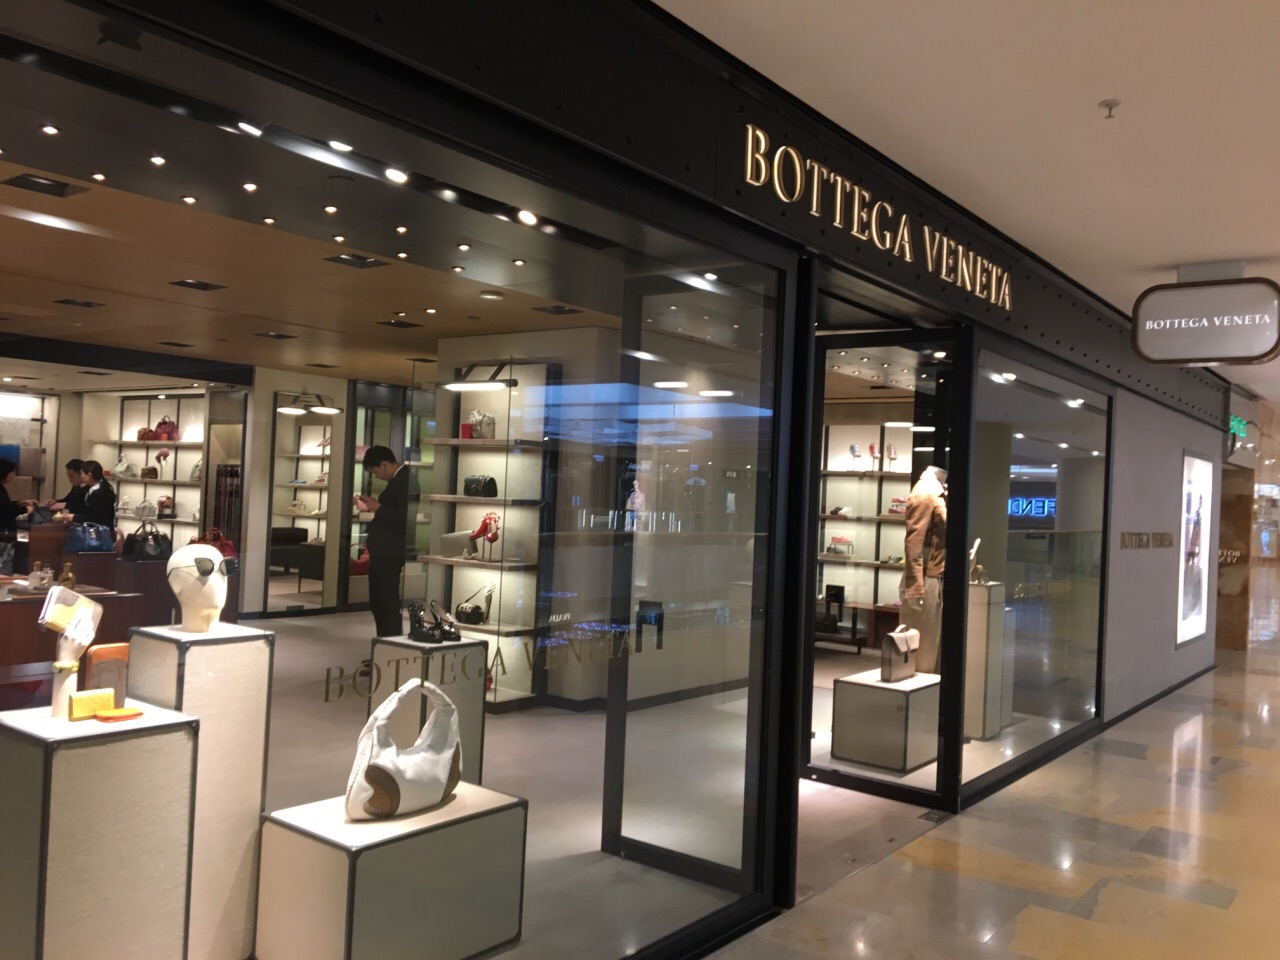 Bottega Veneta store re-opens in Pacific Place, Hong Kong - The